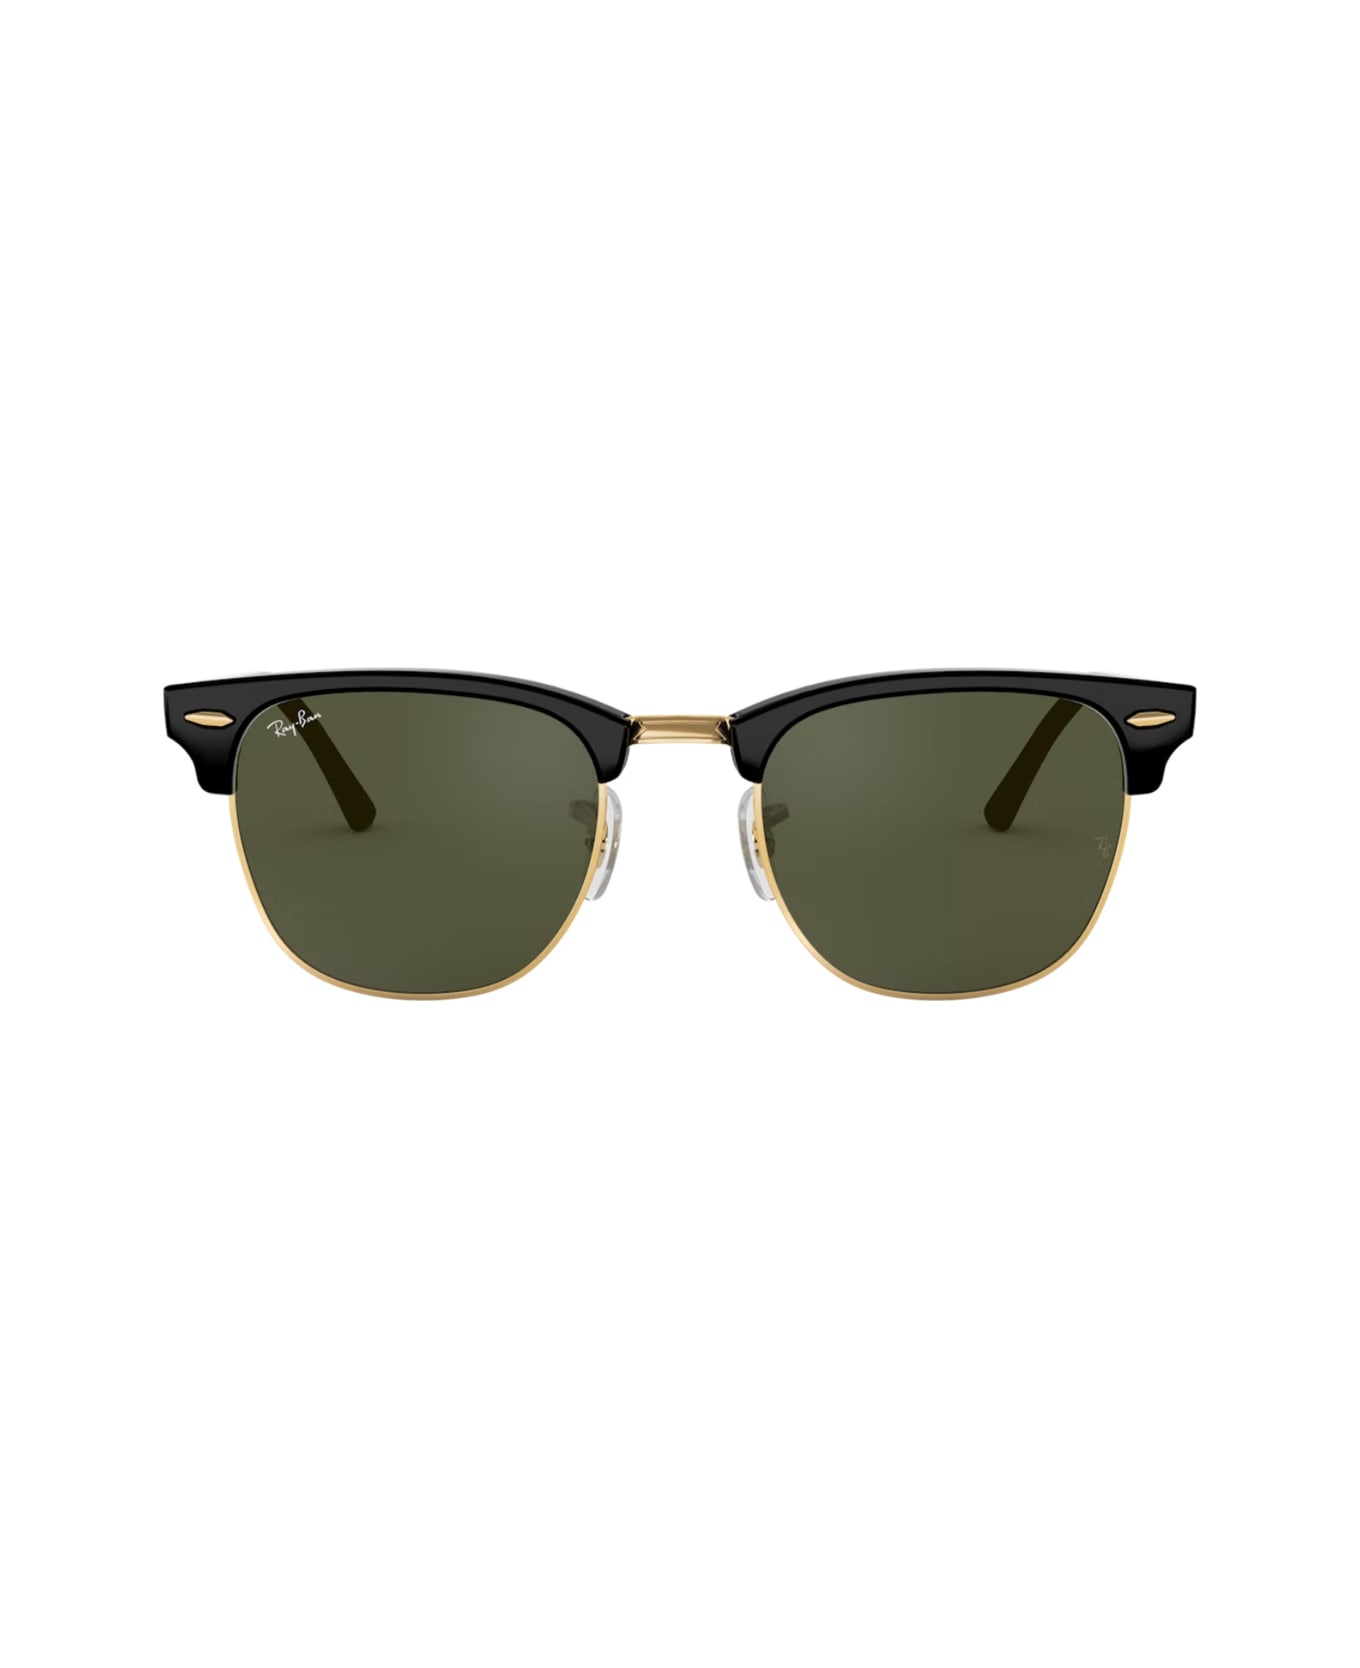 Ray-Ban Rb3016 - Clubmaster Sole W0365 Sunglasses - Nero